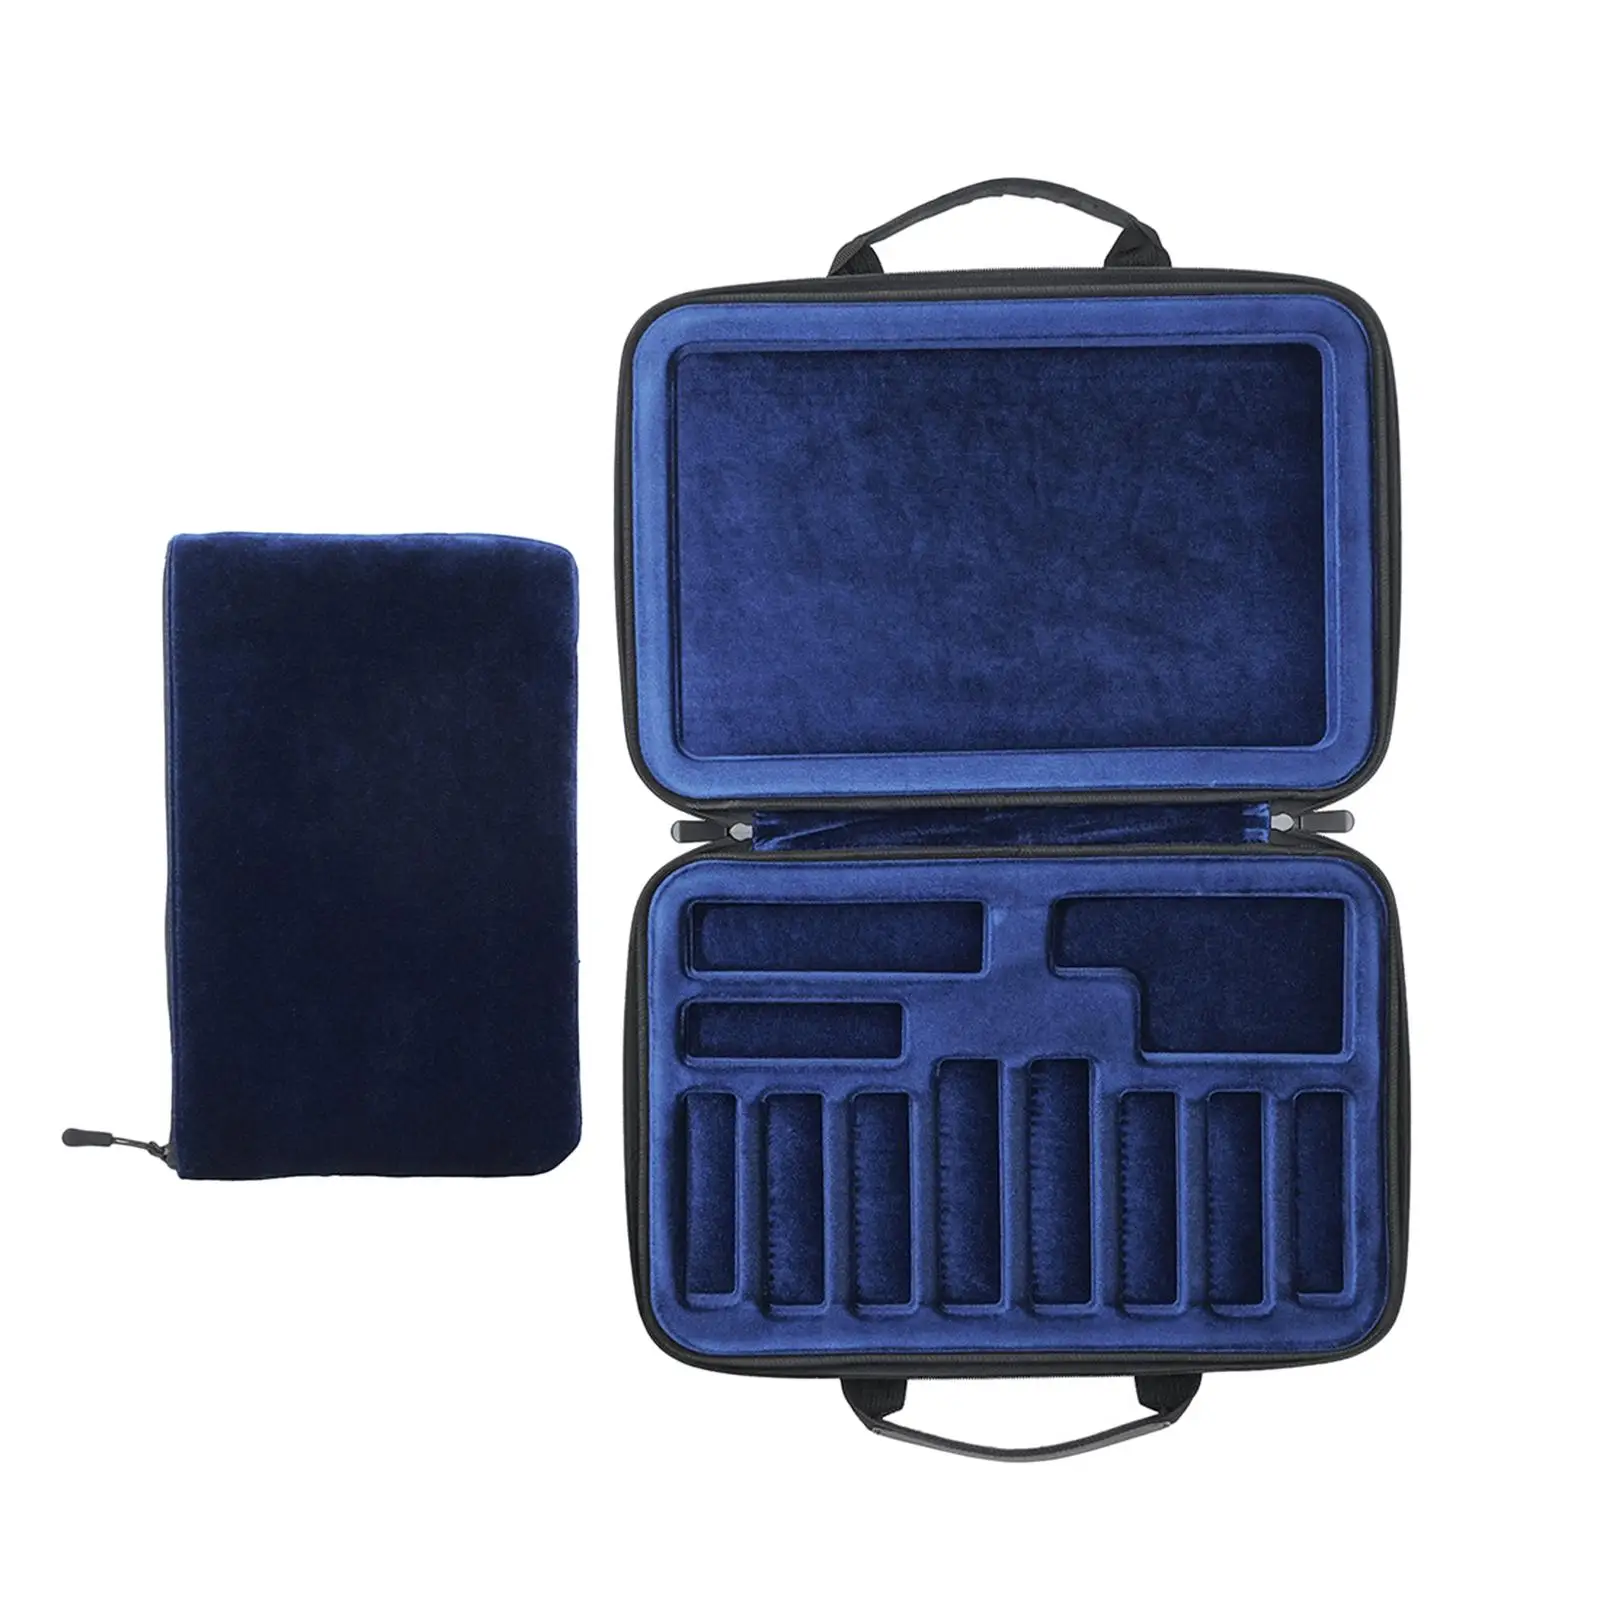 Saxophone Case Soft Abrasion Resistant Soft Non Lining Storage Bag